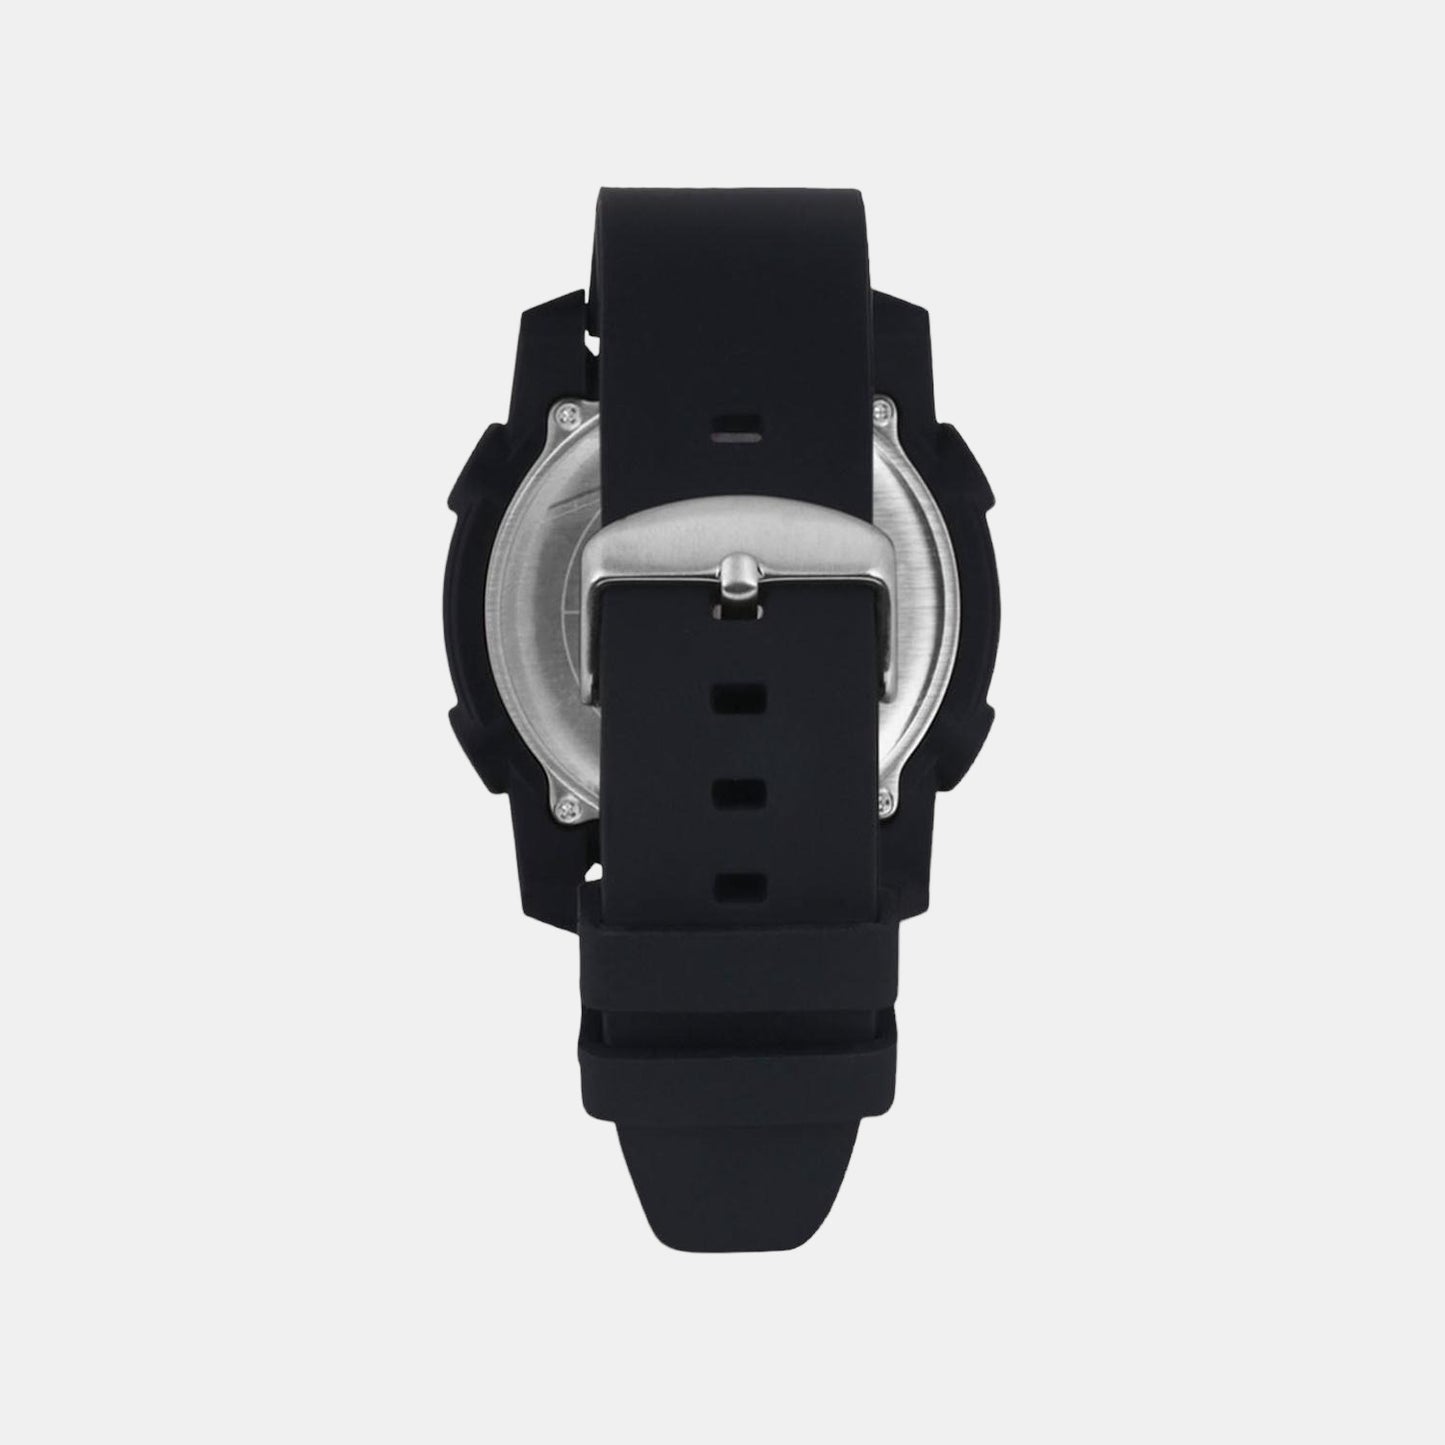 helix-plastic-black-analog-men-watch-twesk0703t